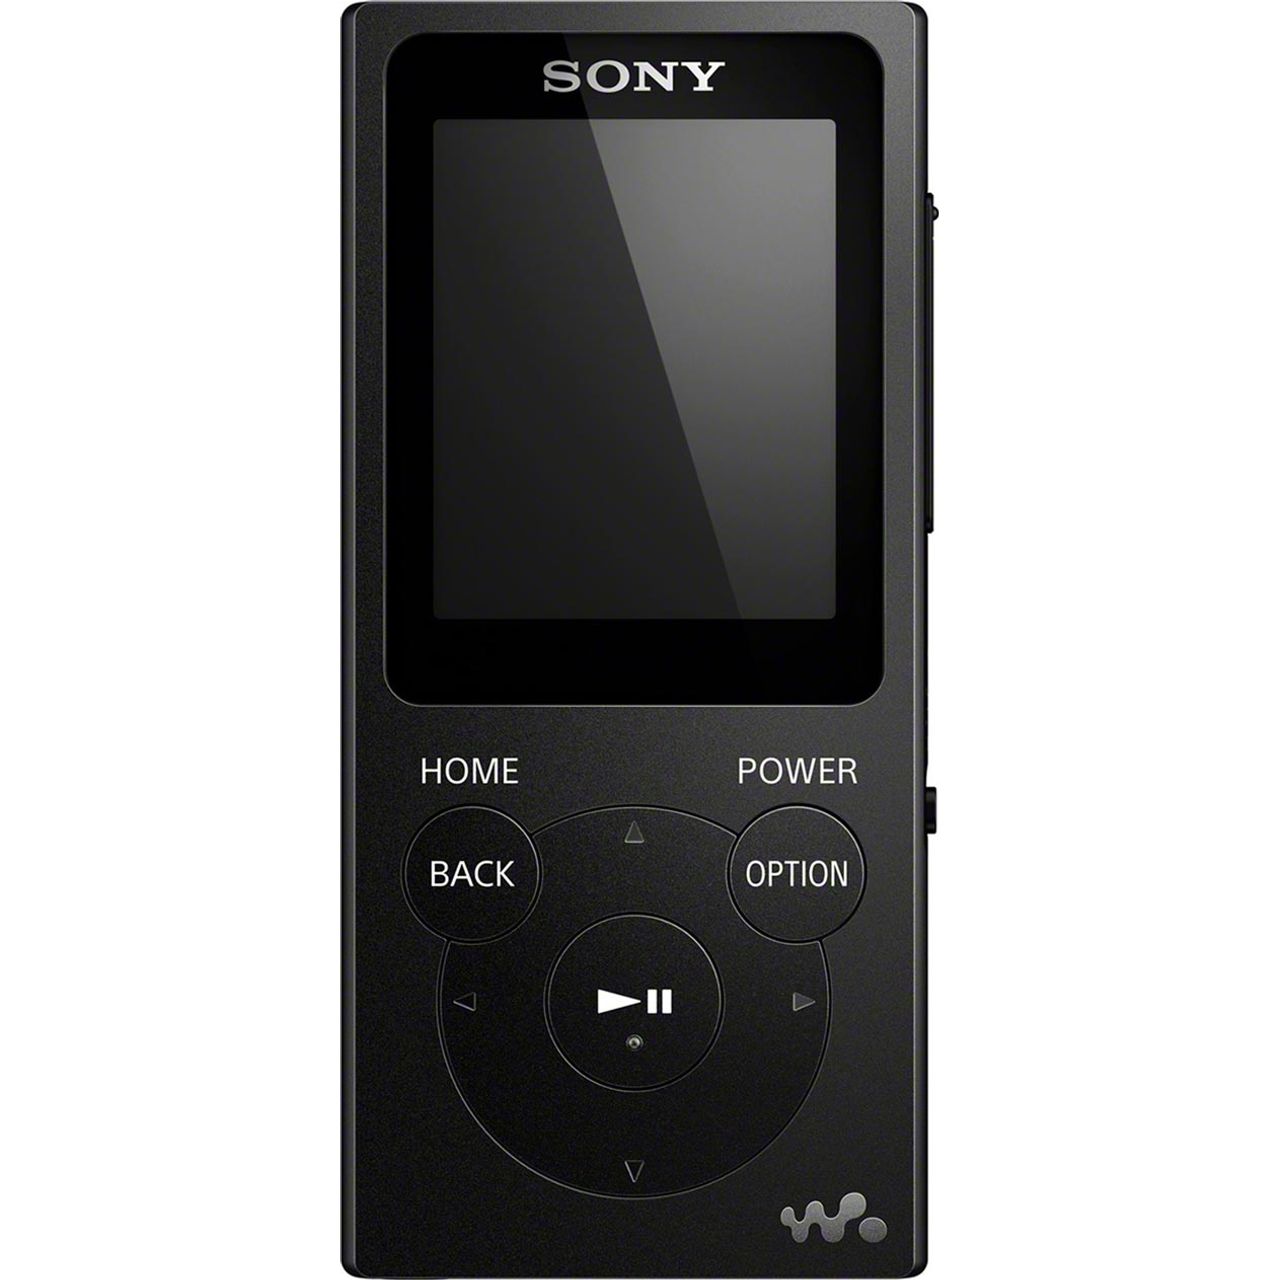 Sony NW-E394 Walkman MP3 Player with FM Radio Review